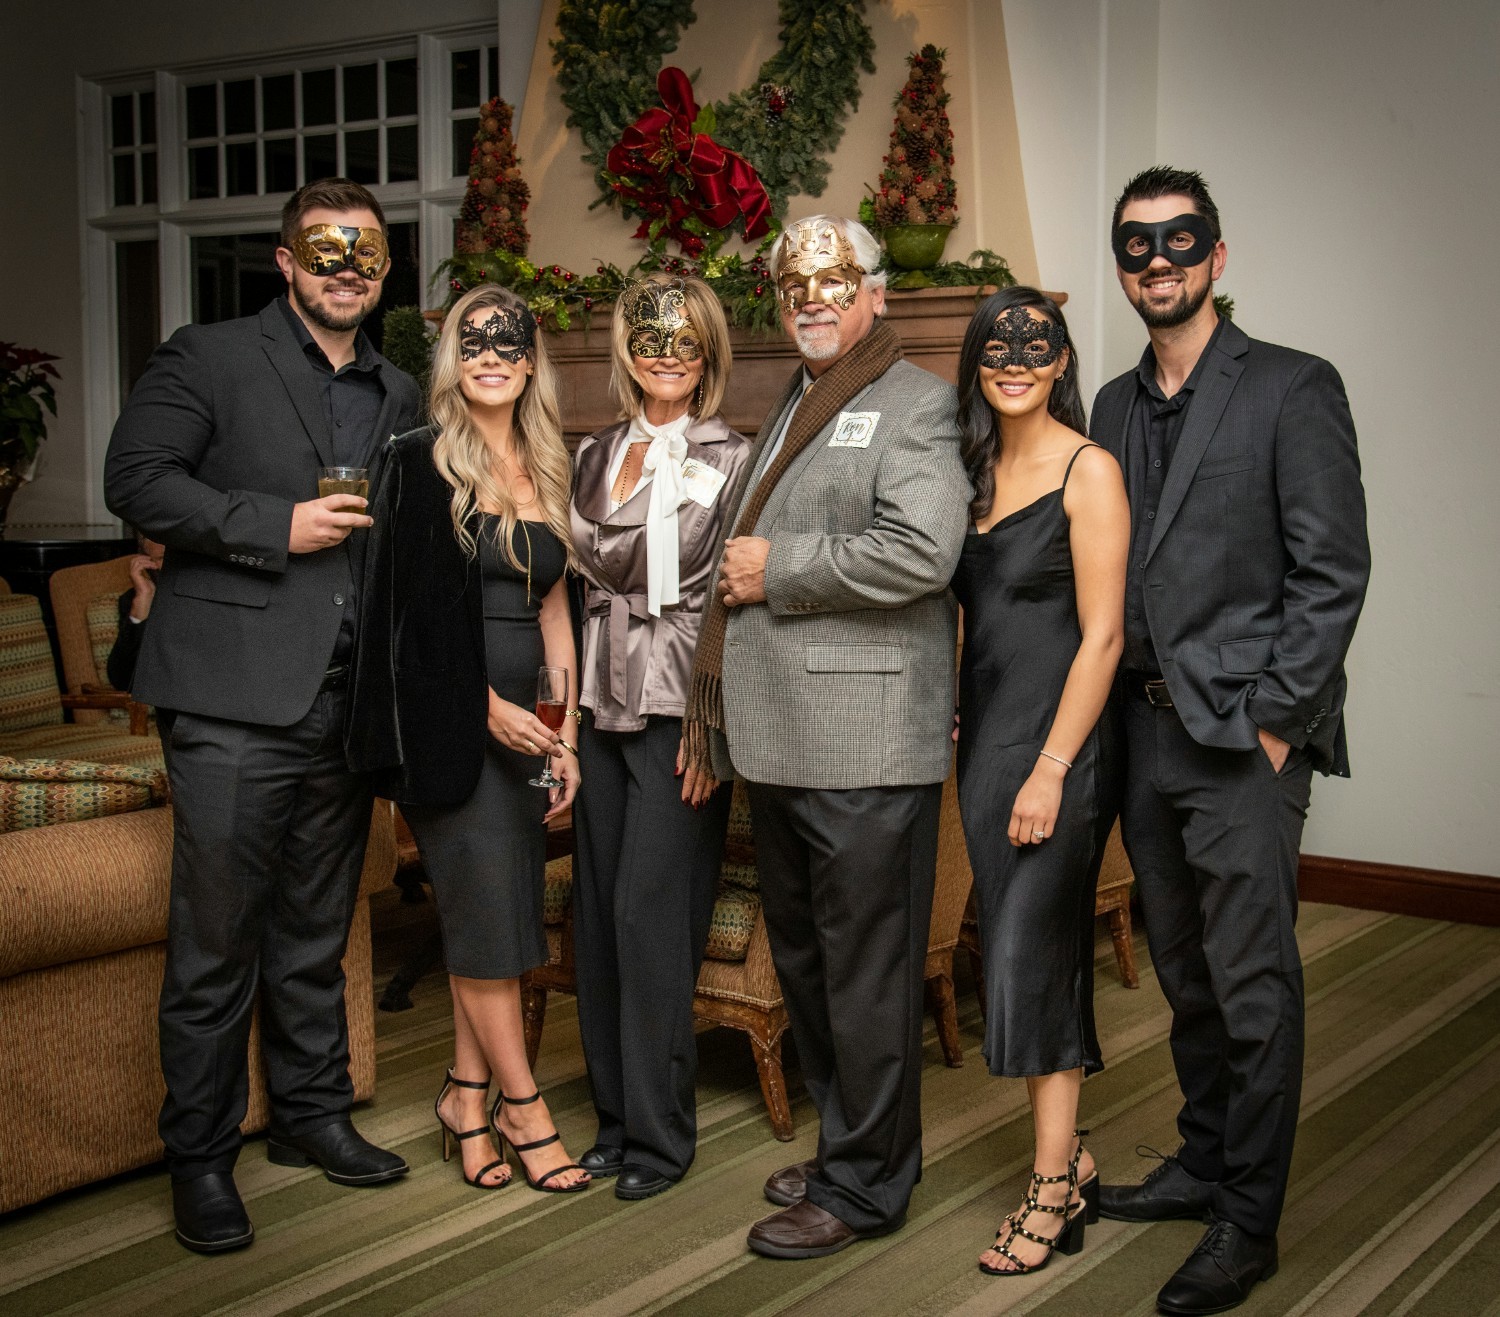 One of HFD Christmas Parties - Masquerade Ball!